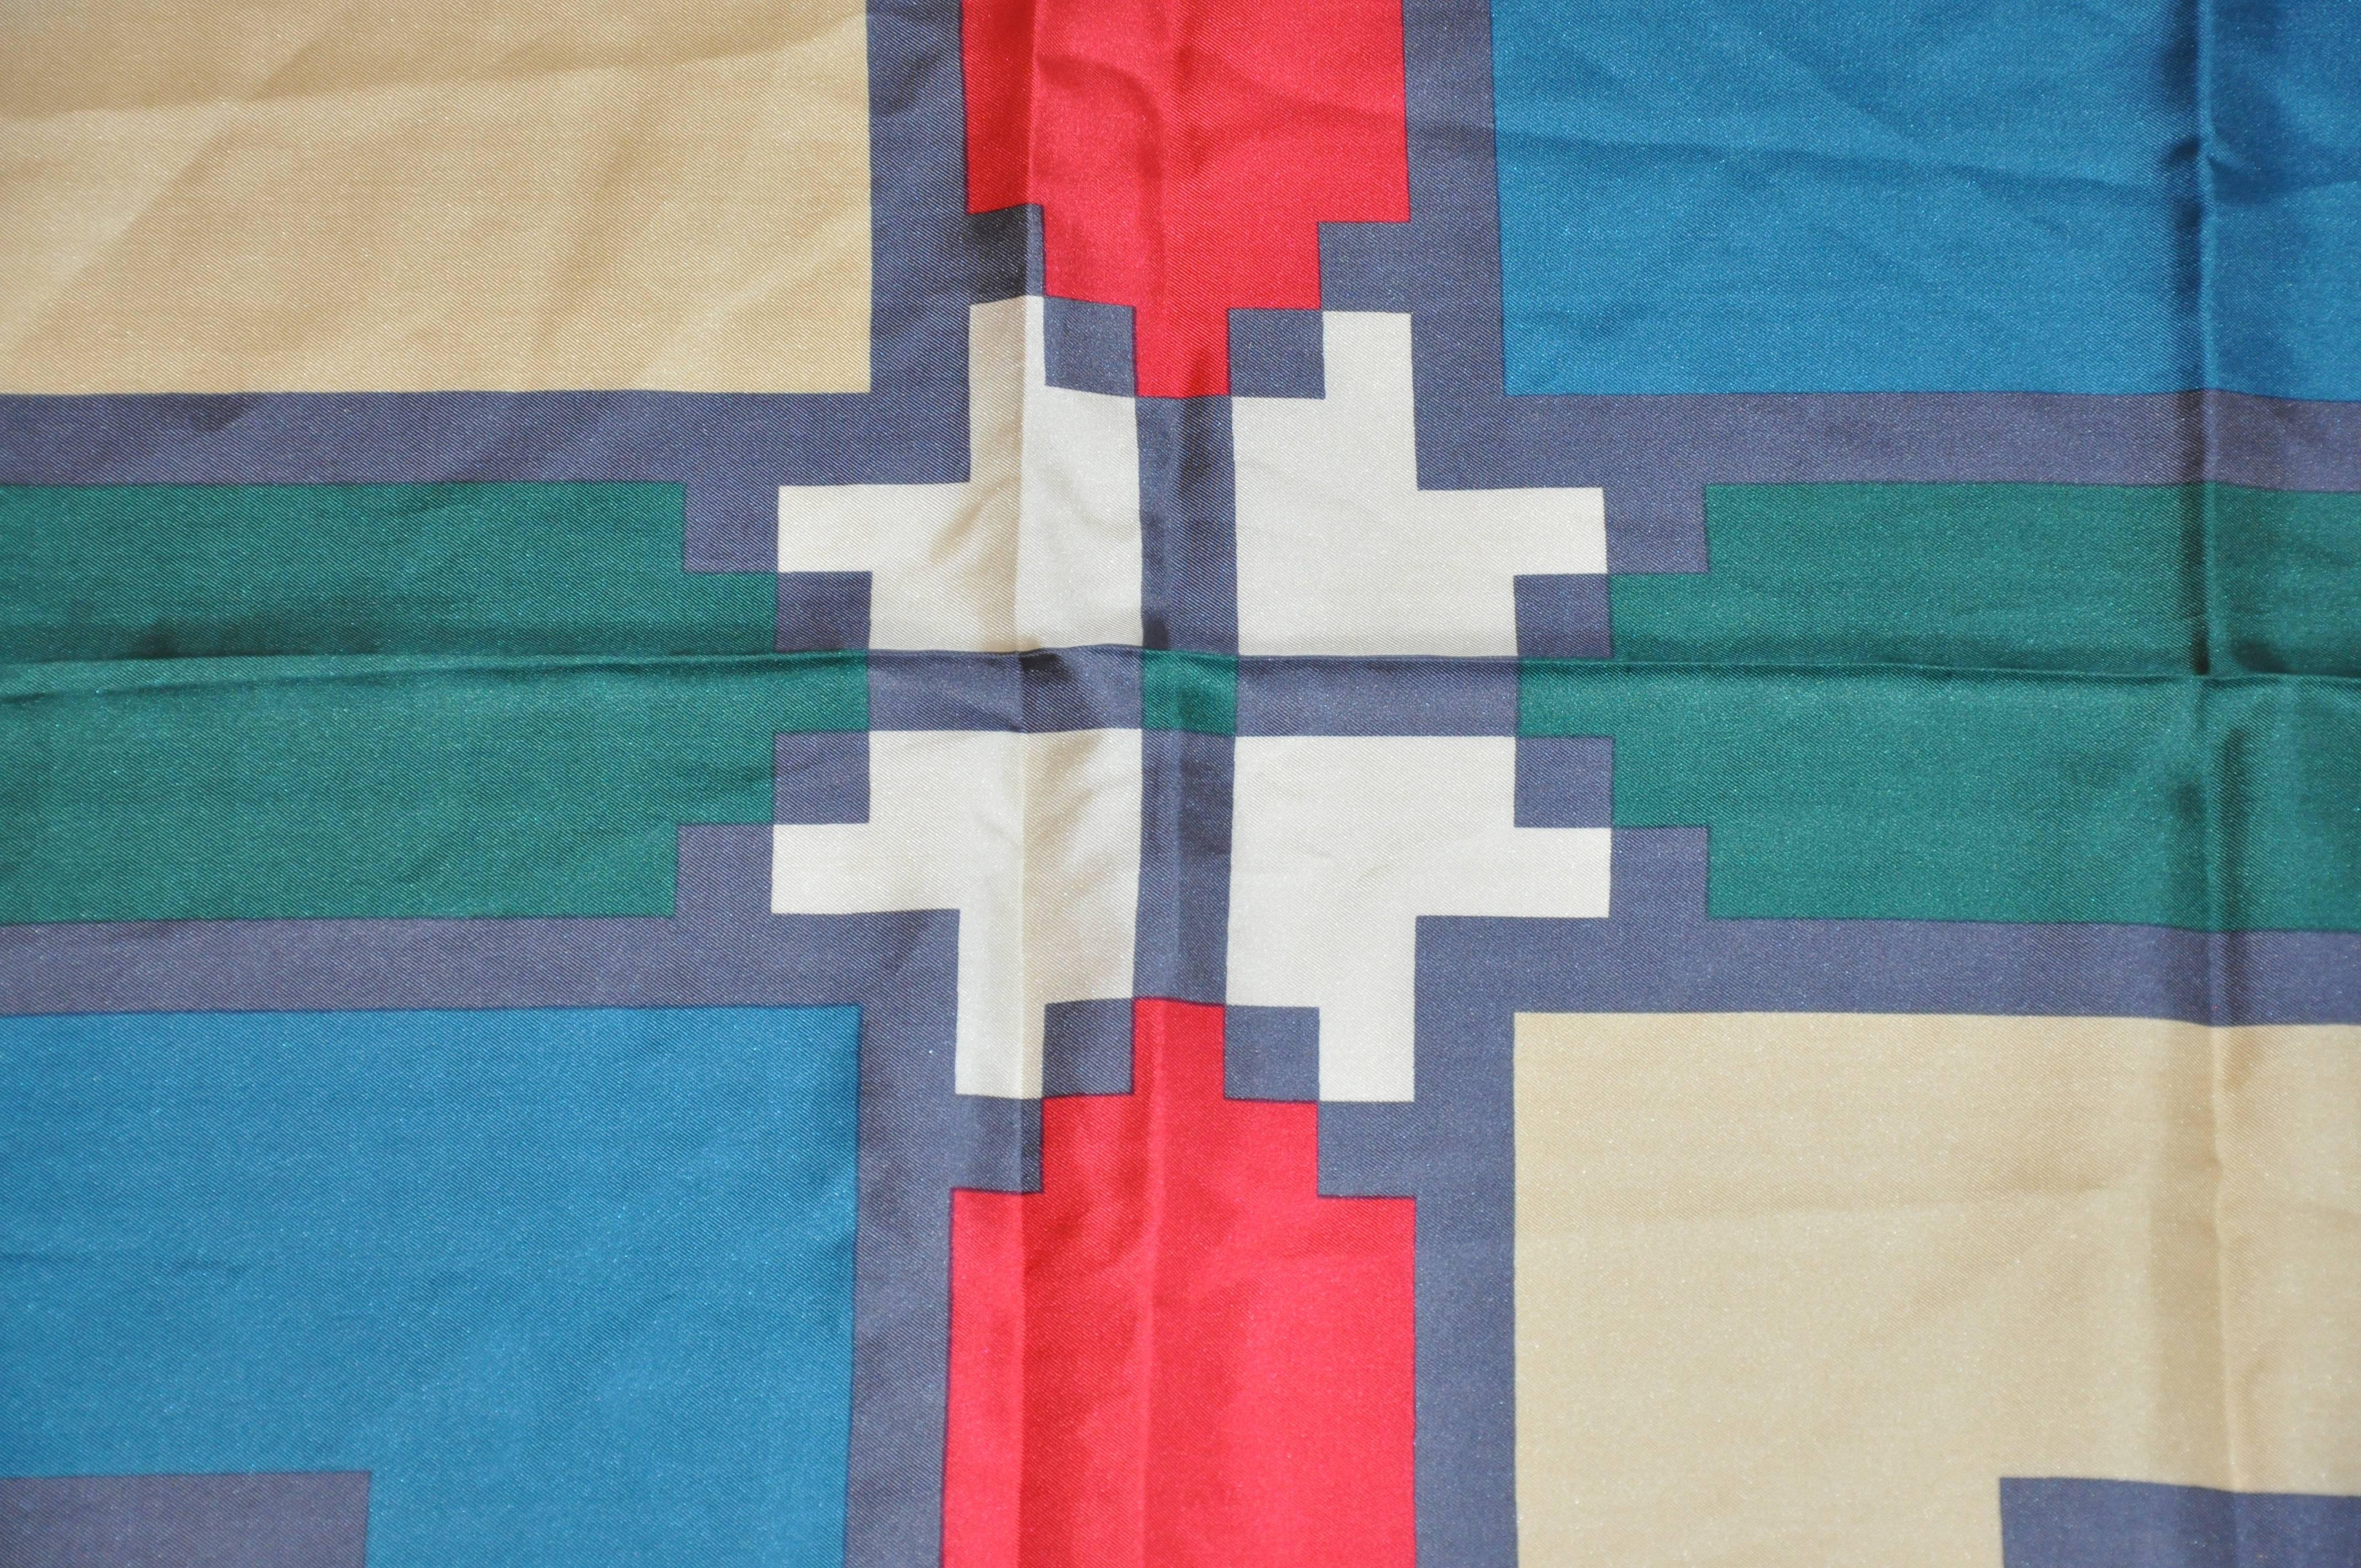        Nina Ricci bold abstract silk scarf measures 30